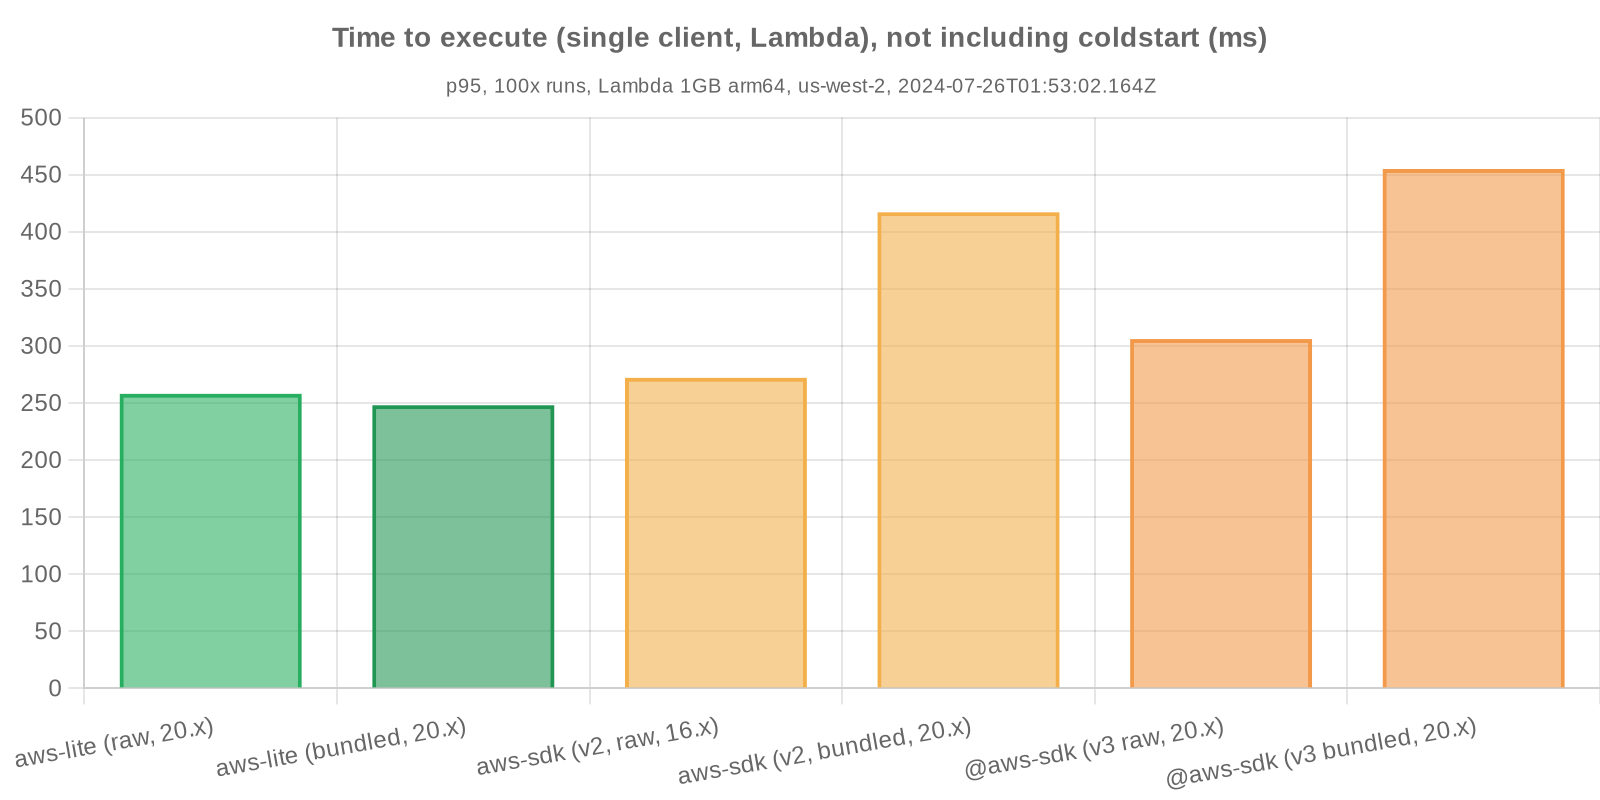 Benchmark statistics - Time to respond, not including coldstart (Lambda)